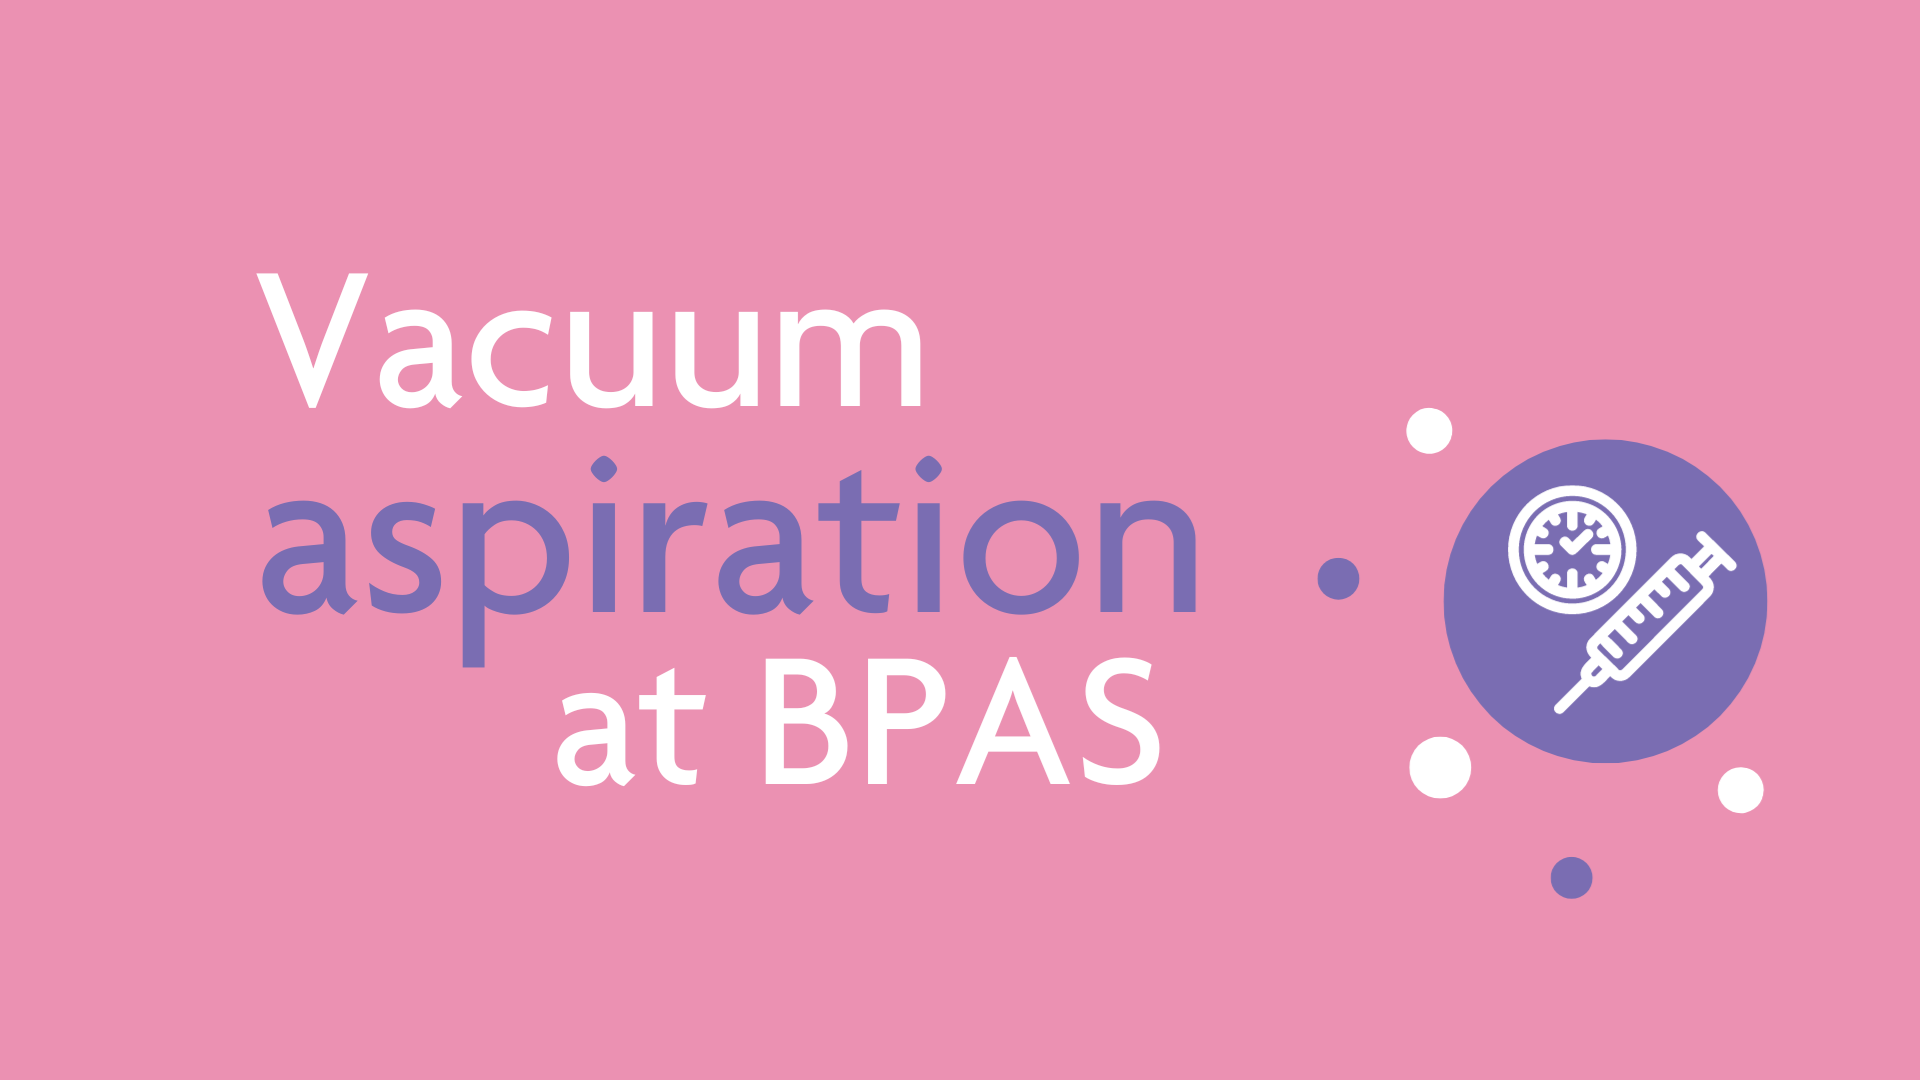 BPAS Vacuum aspiration